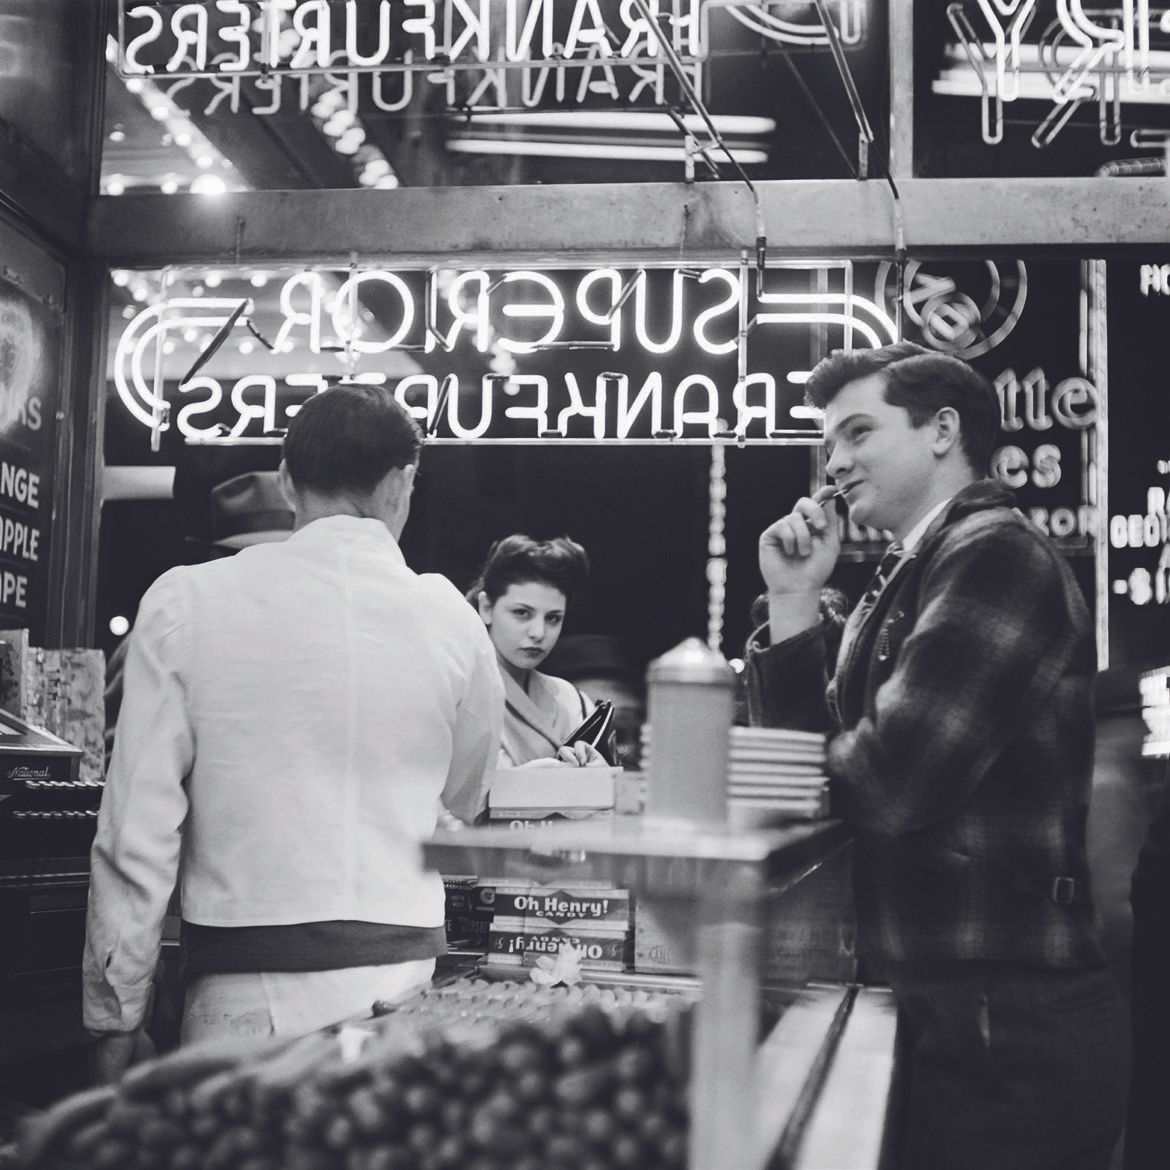 AFP - Eric SCHWAB AFP - Eric SCHWAB

In a “milk bar” on Broadway, in March 1947,&hellip;